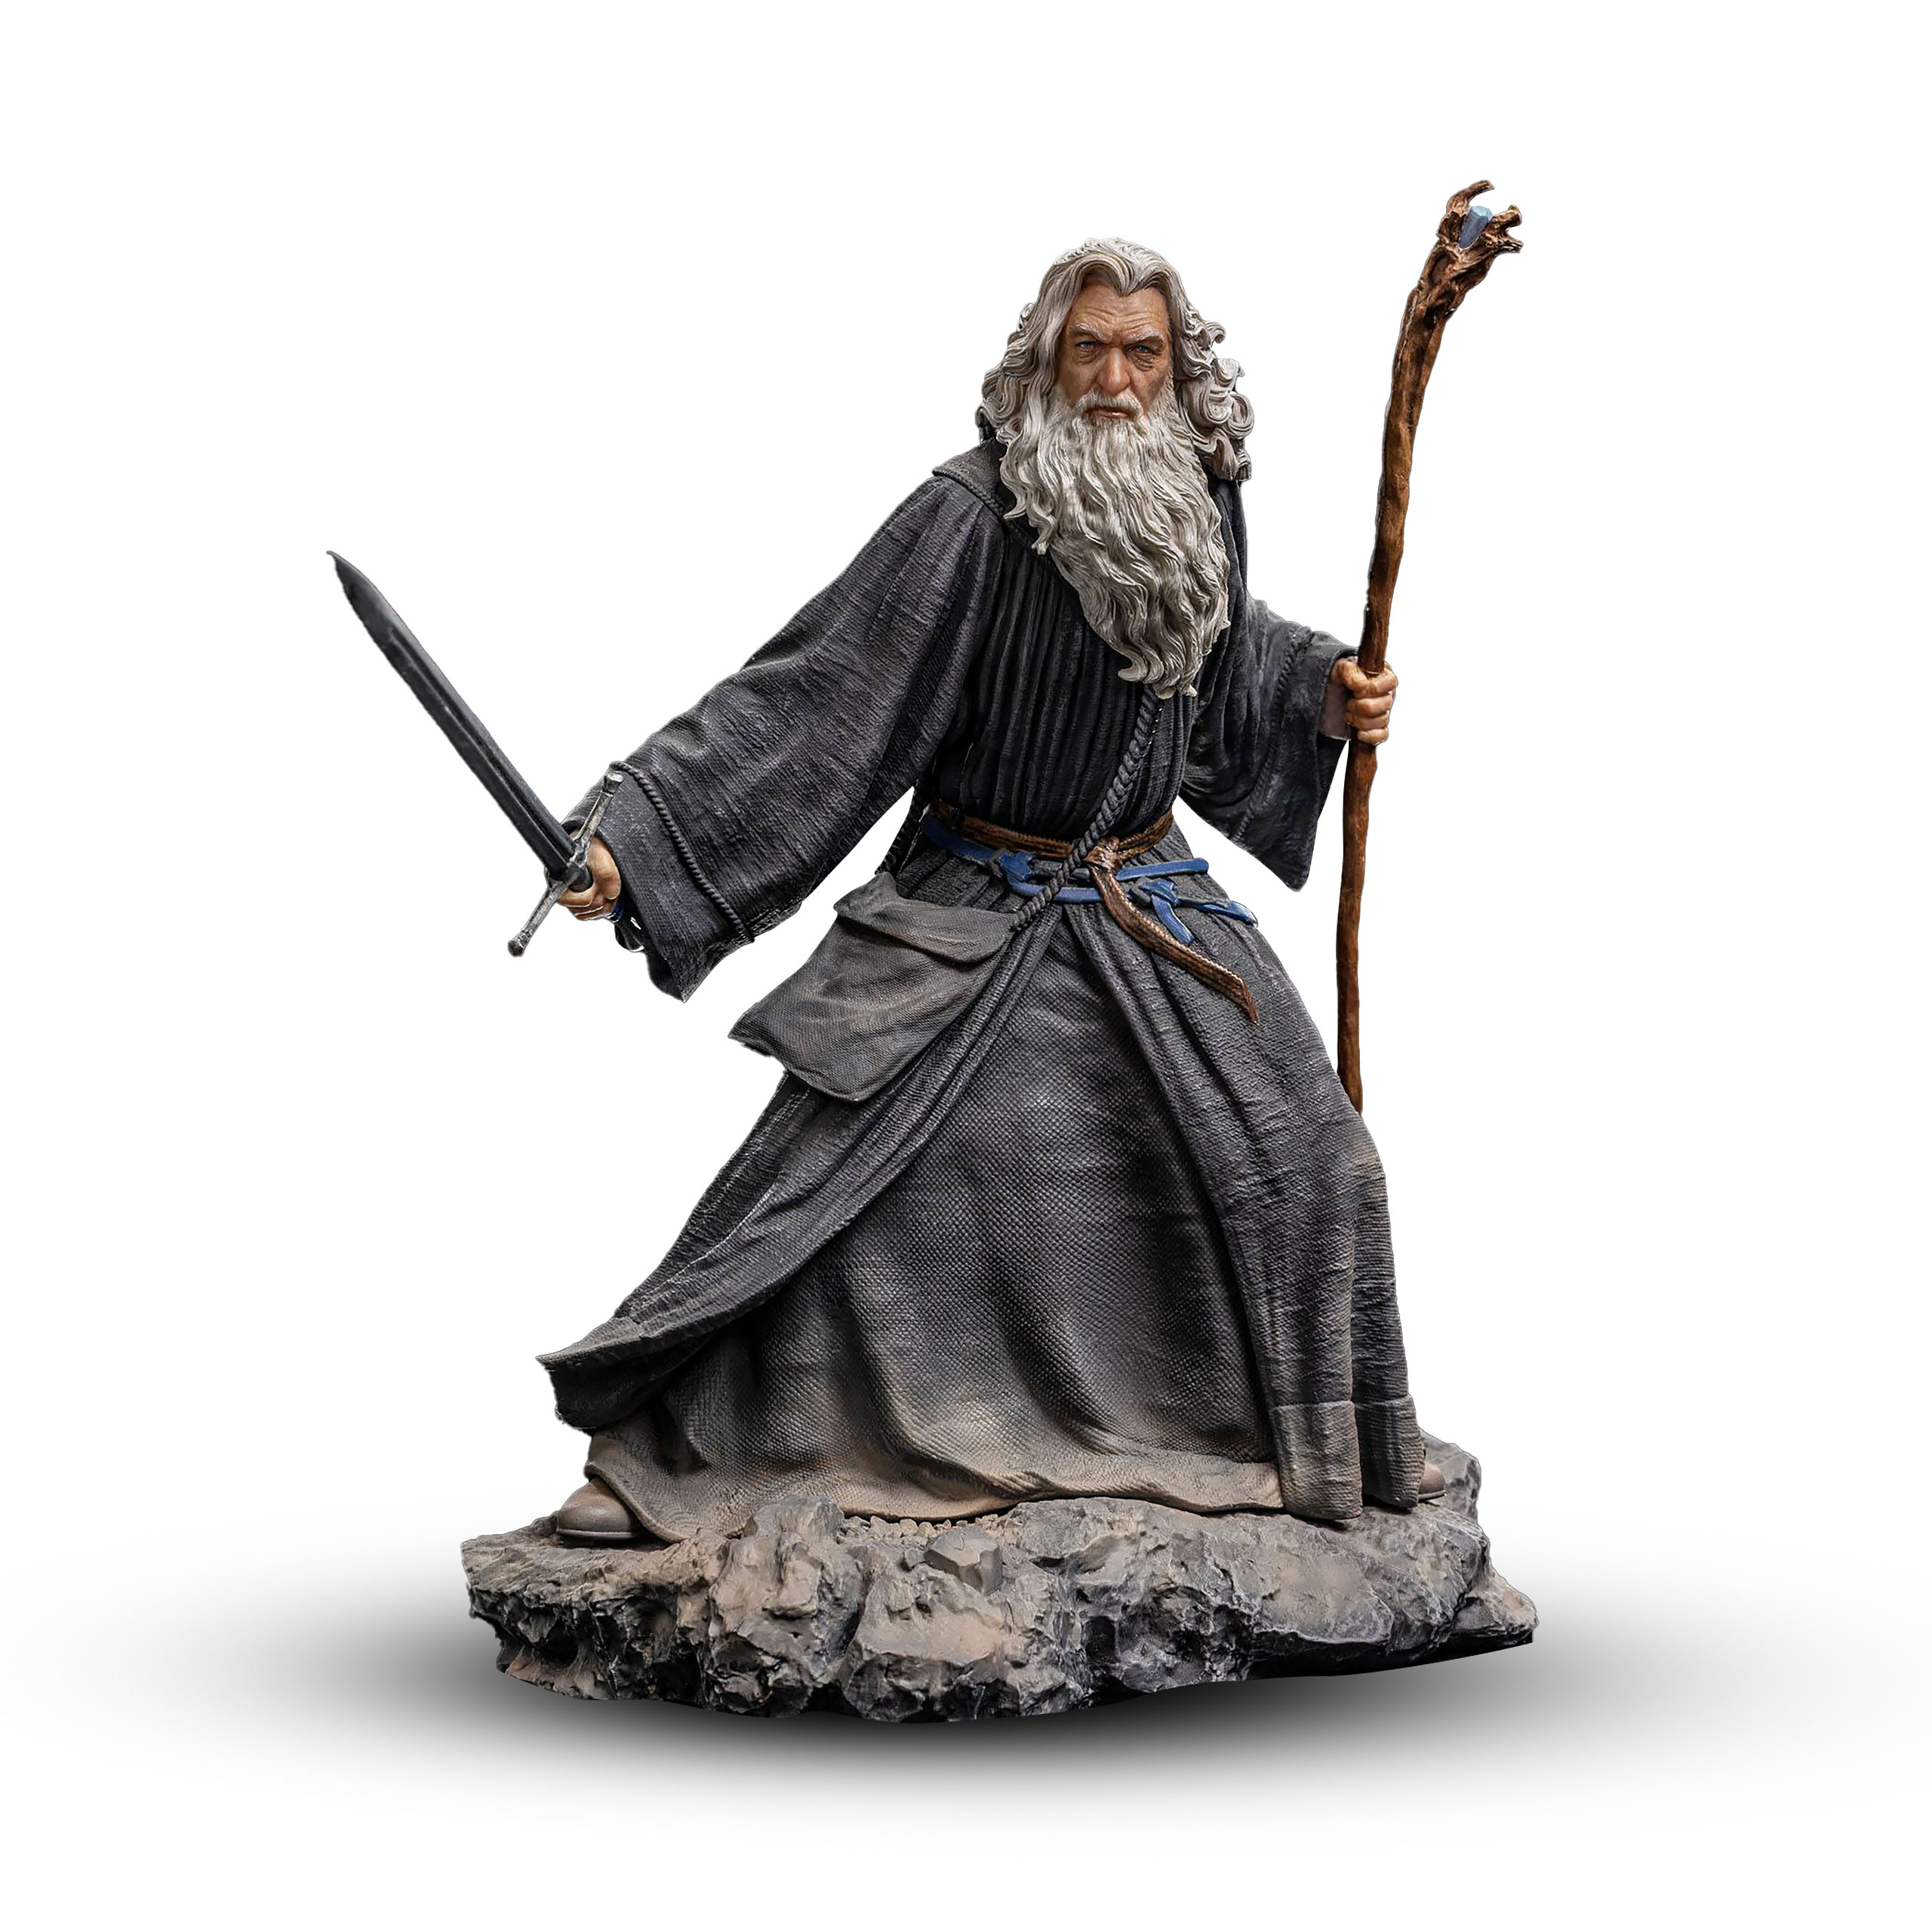 Herr der Ringe - Gandalf BDS Art Scale Deluxe Statue 1:10